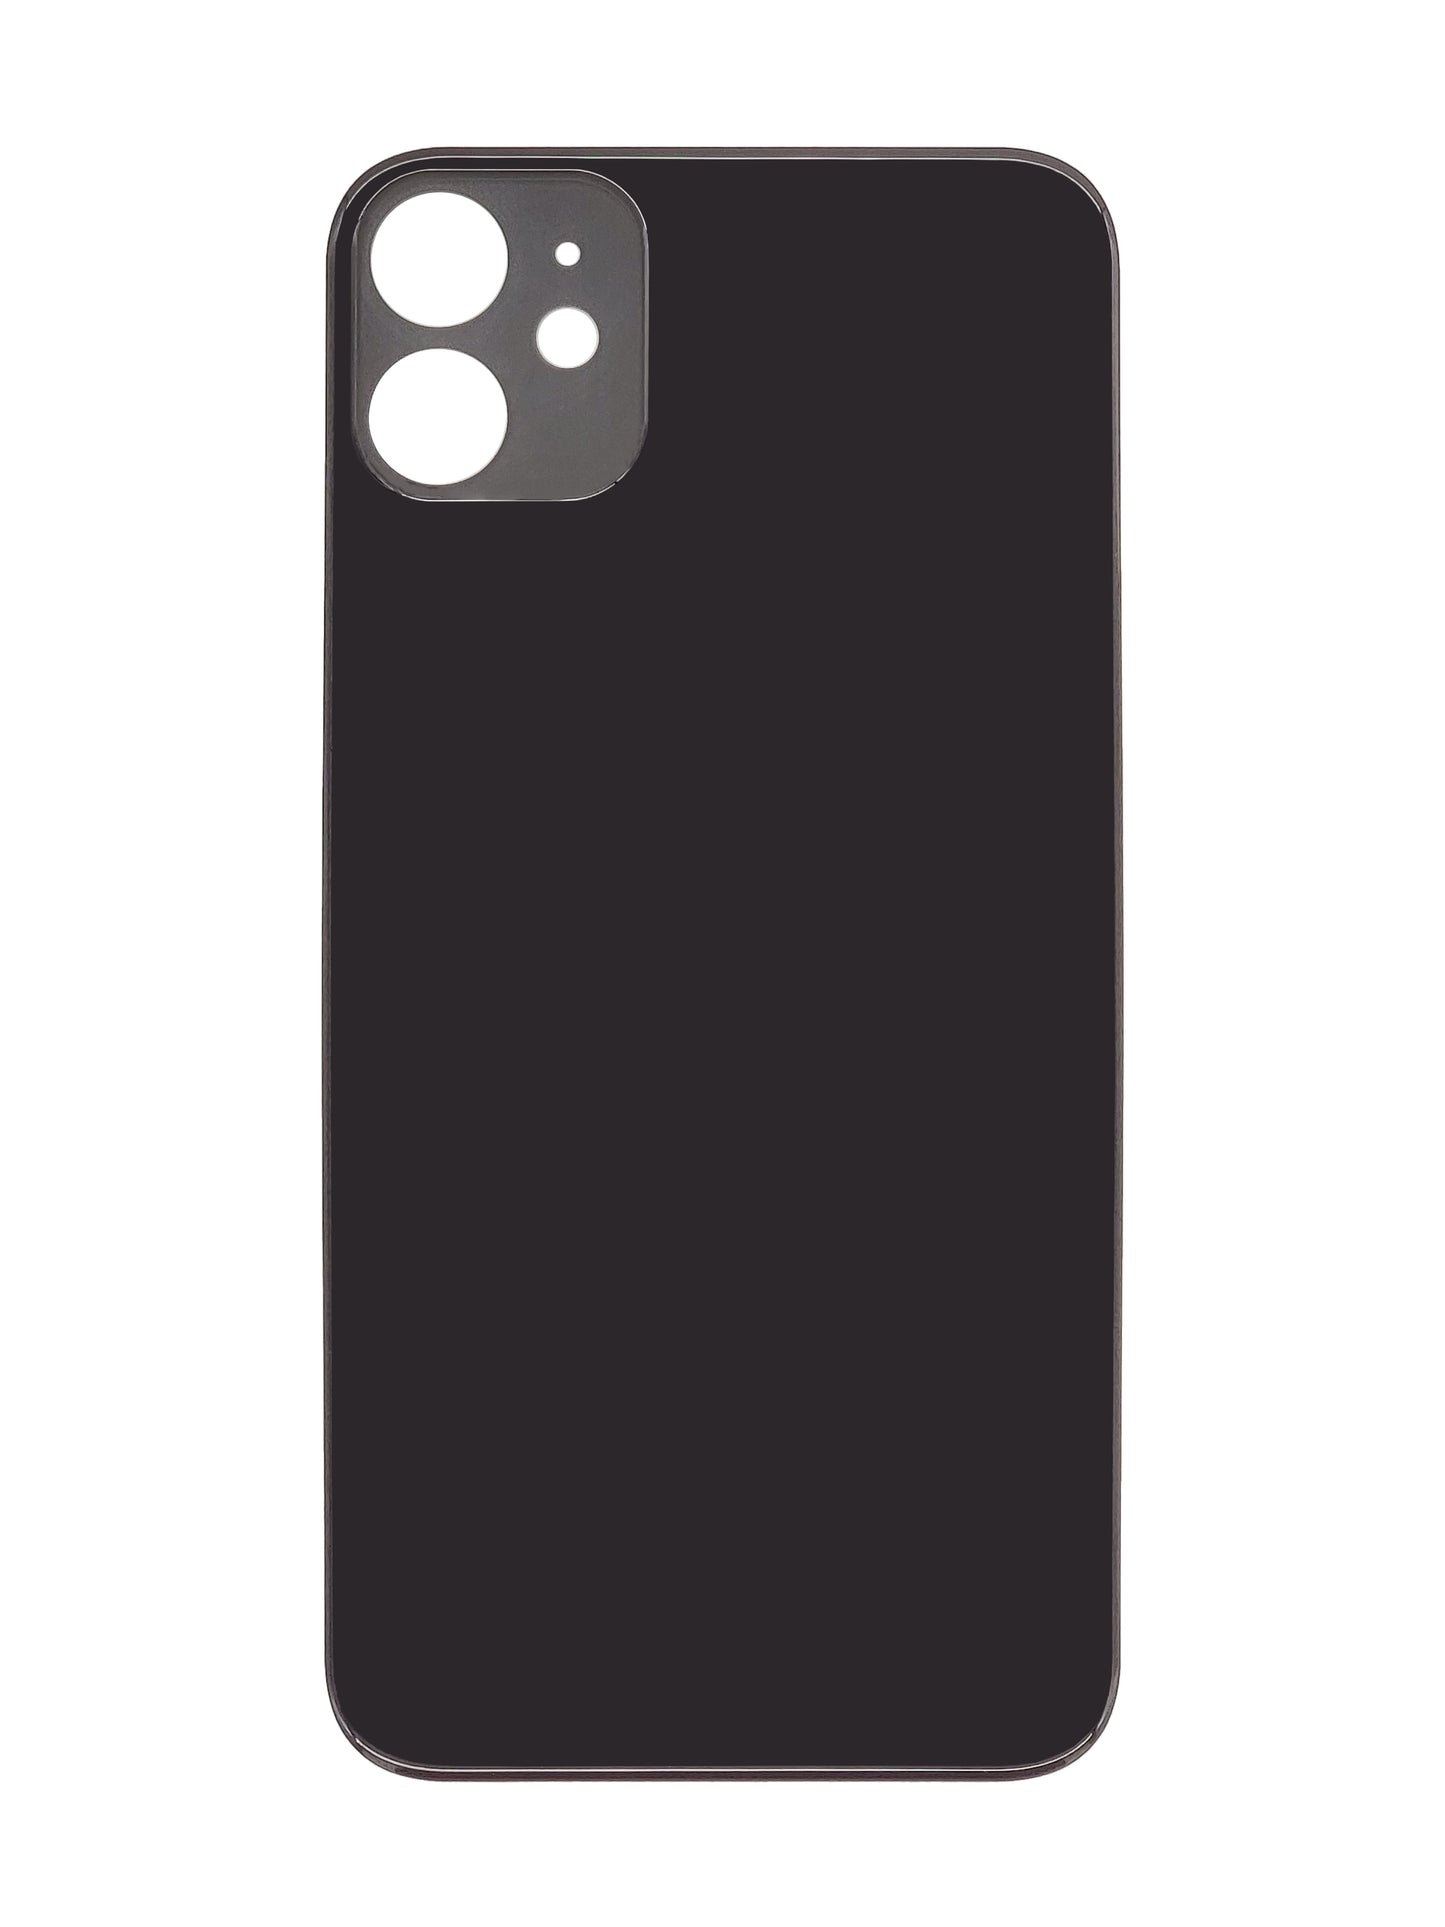 iPhone 11 Back Glass (No Logo) (Black)